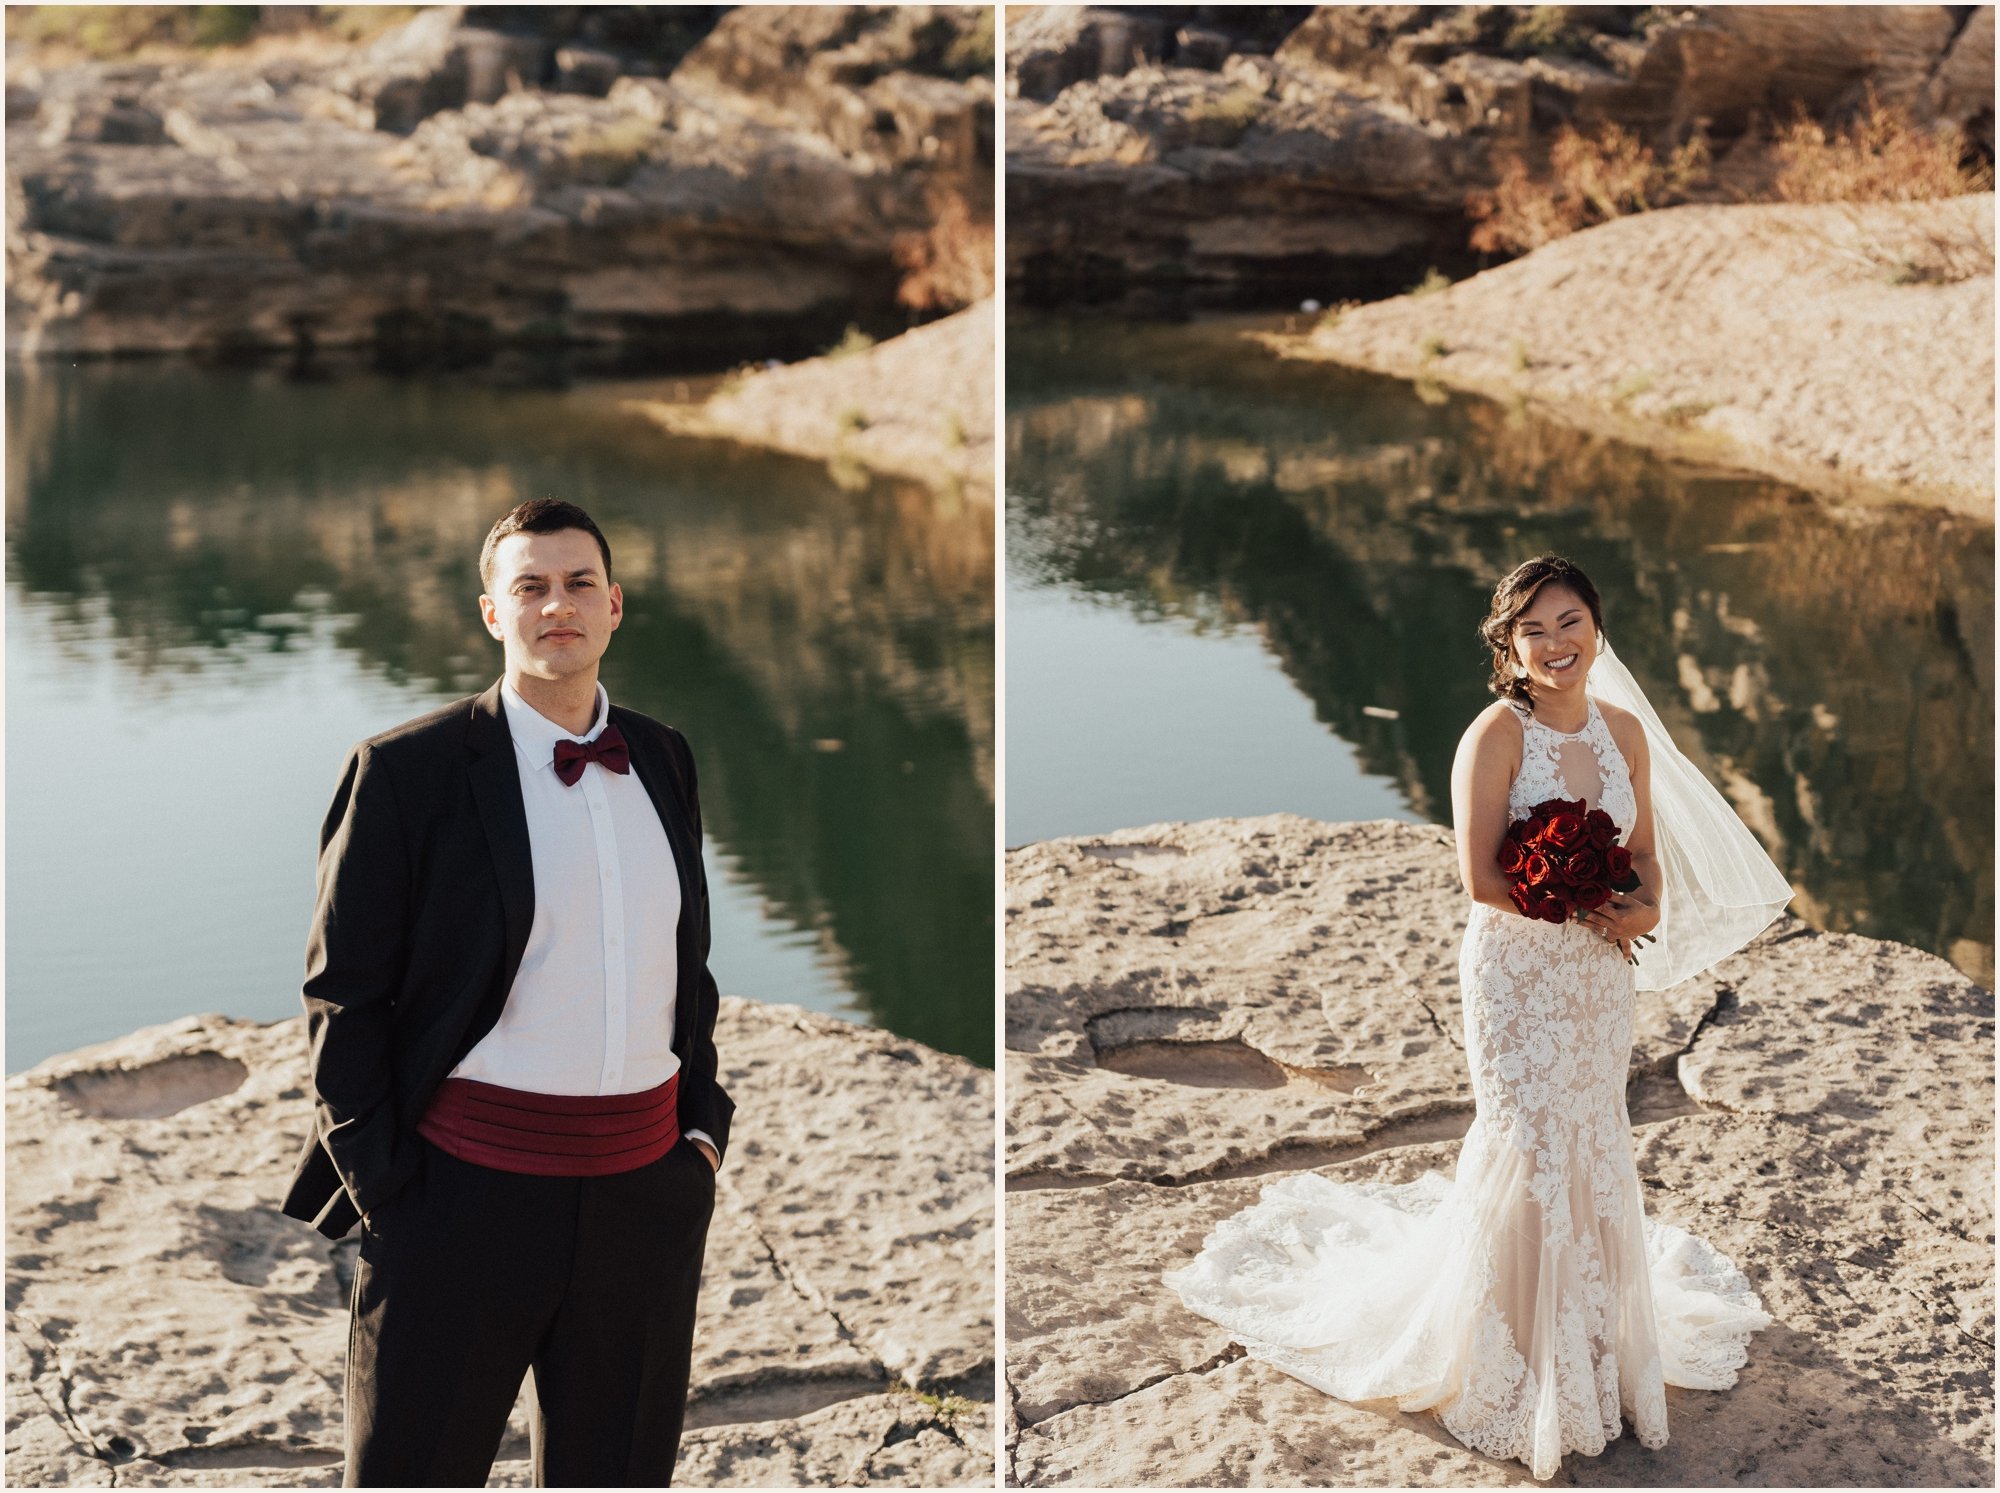 Wedding Portraits at Pedernales Falls State Park in Texas | Lauren Parr Photography | Austin Based Wedding Photographer